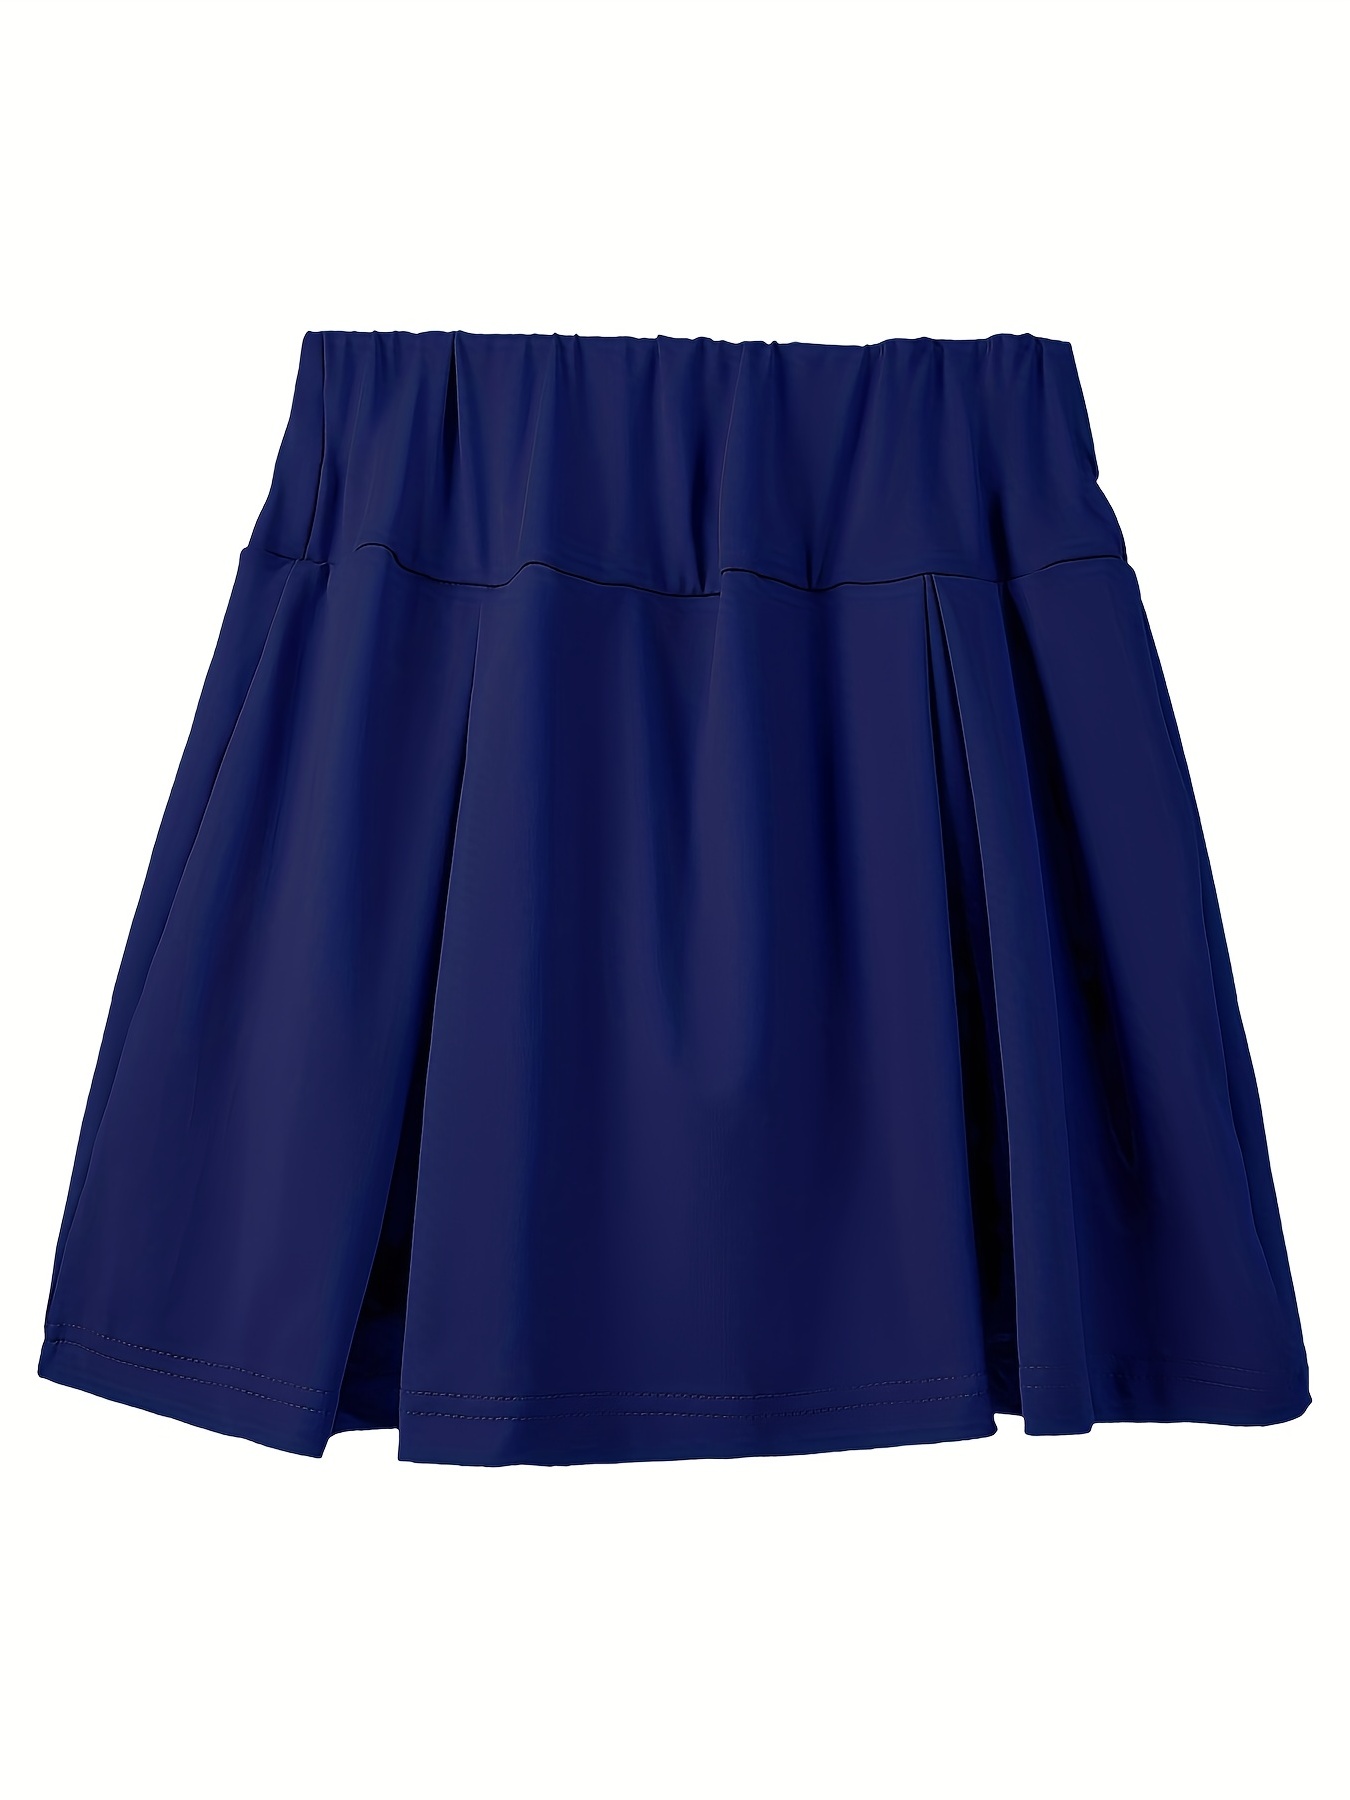 2pcs 2 in 1 sports short skirts for running golf tennis fashion elastic waist active skorts womens activewear details 9